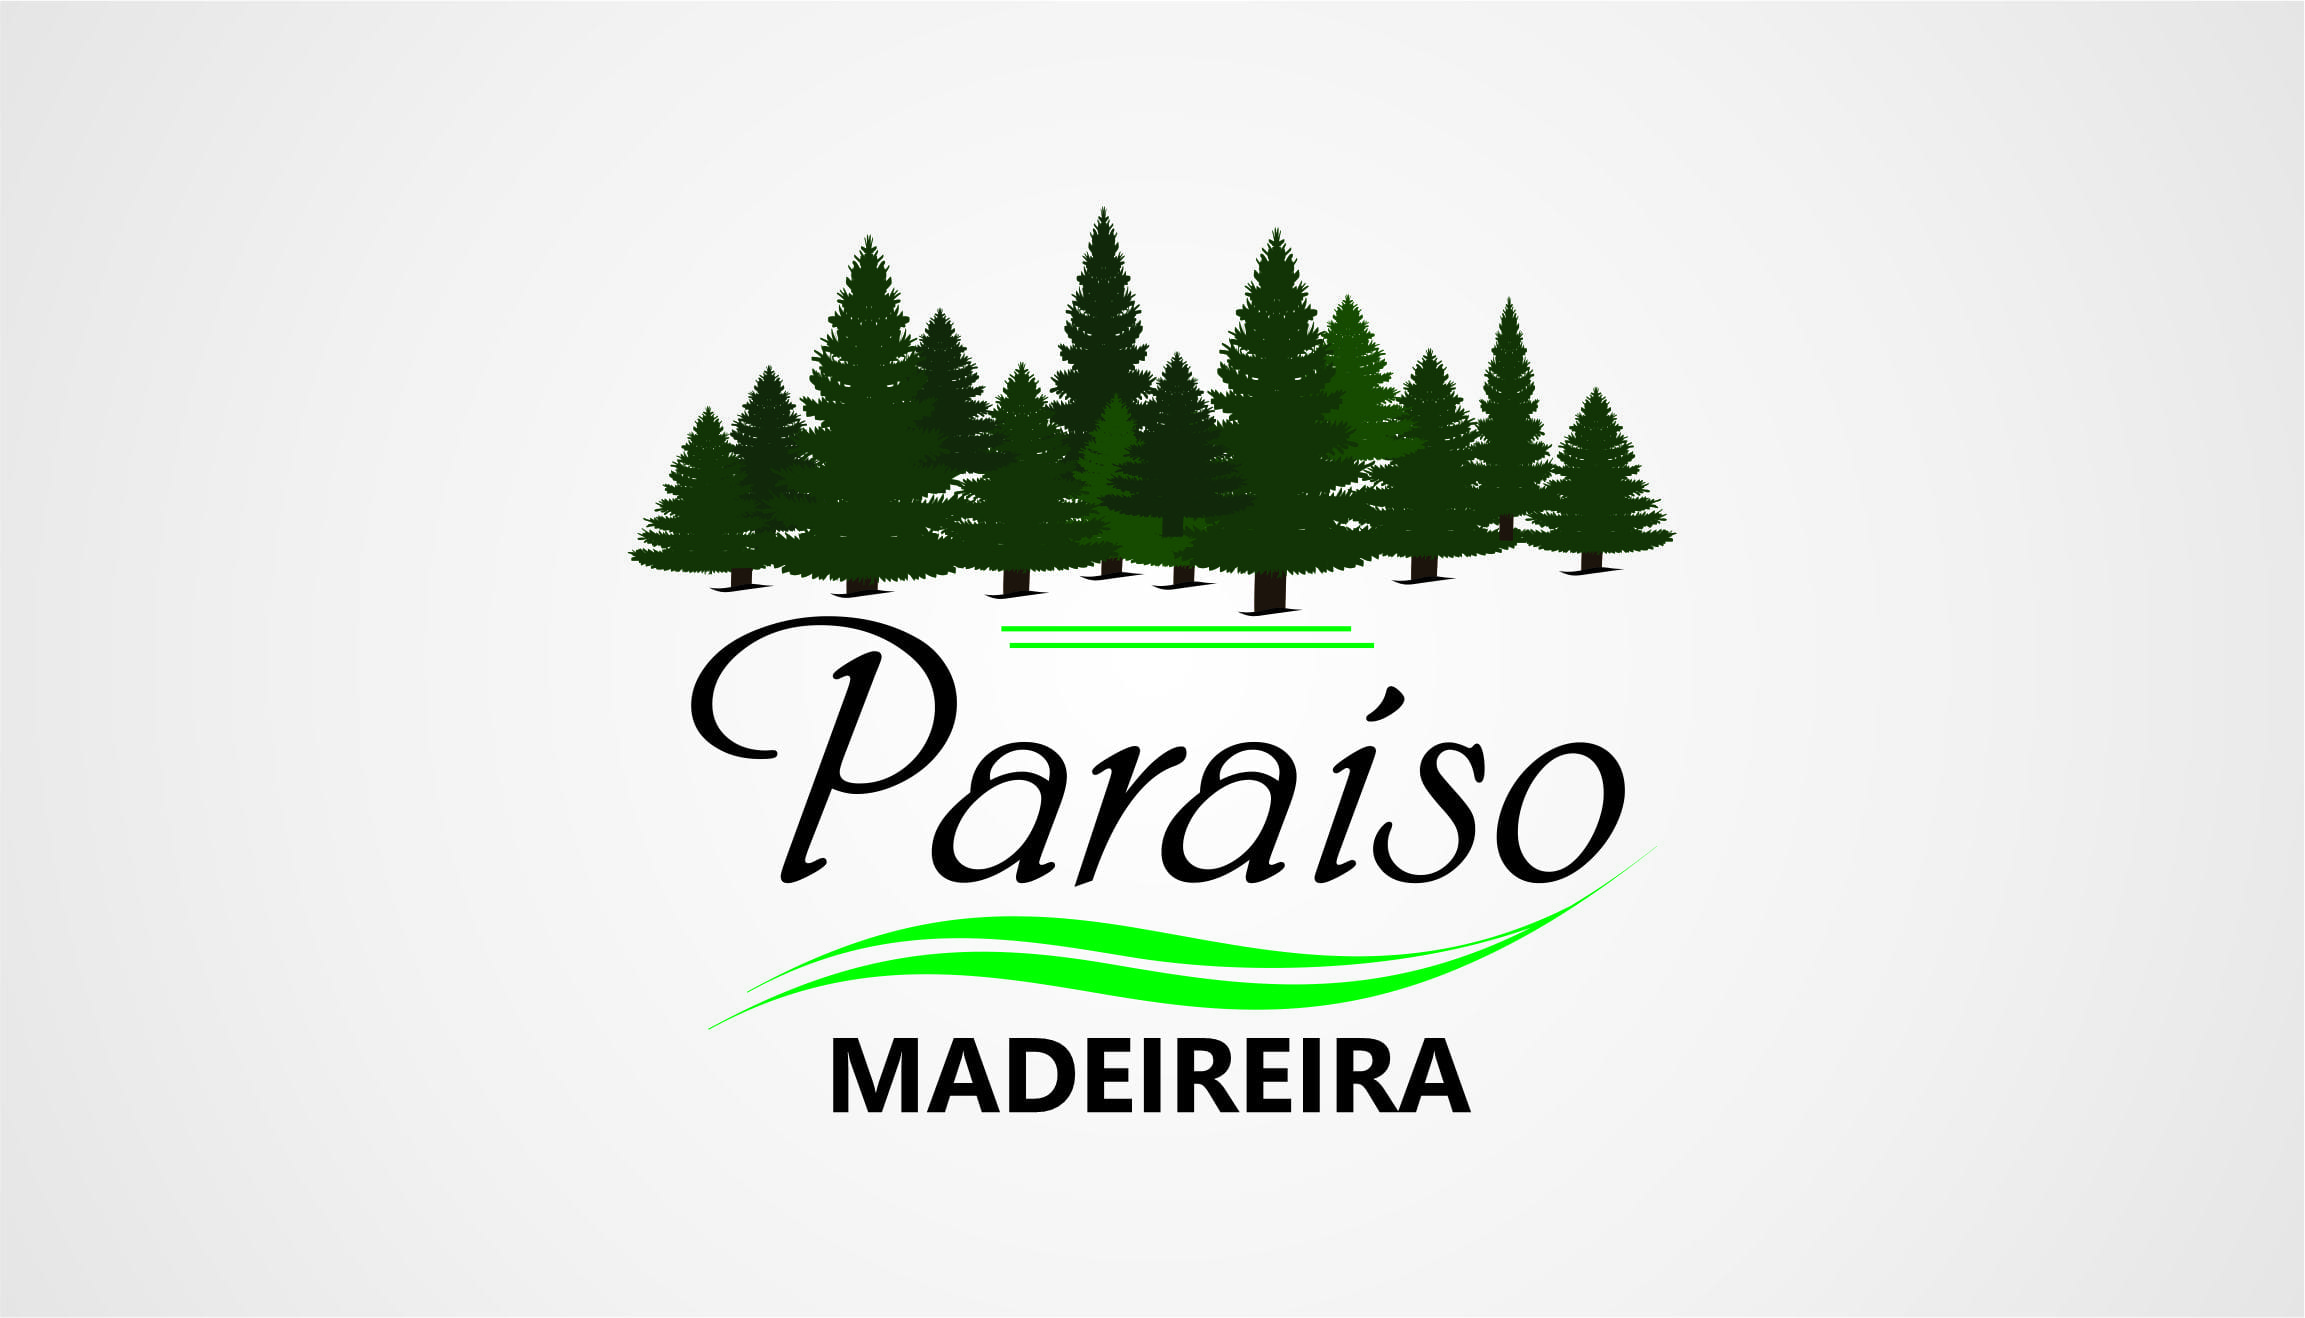 Paraíso Madeireira